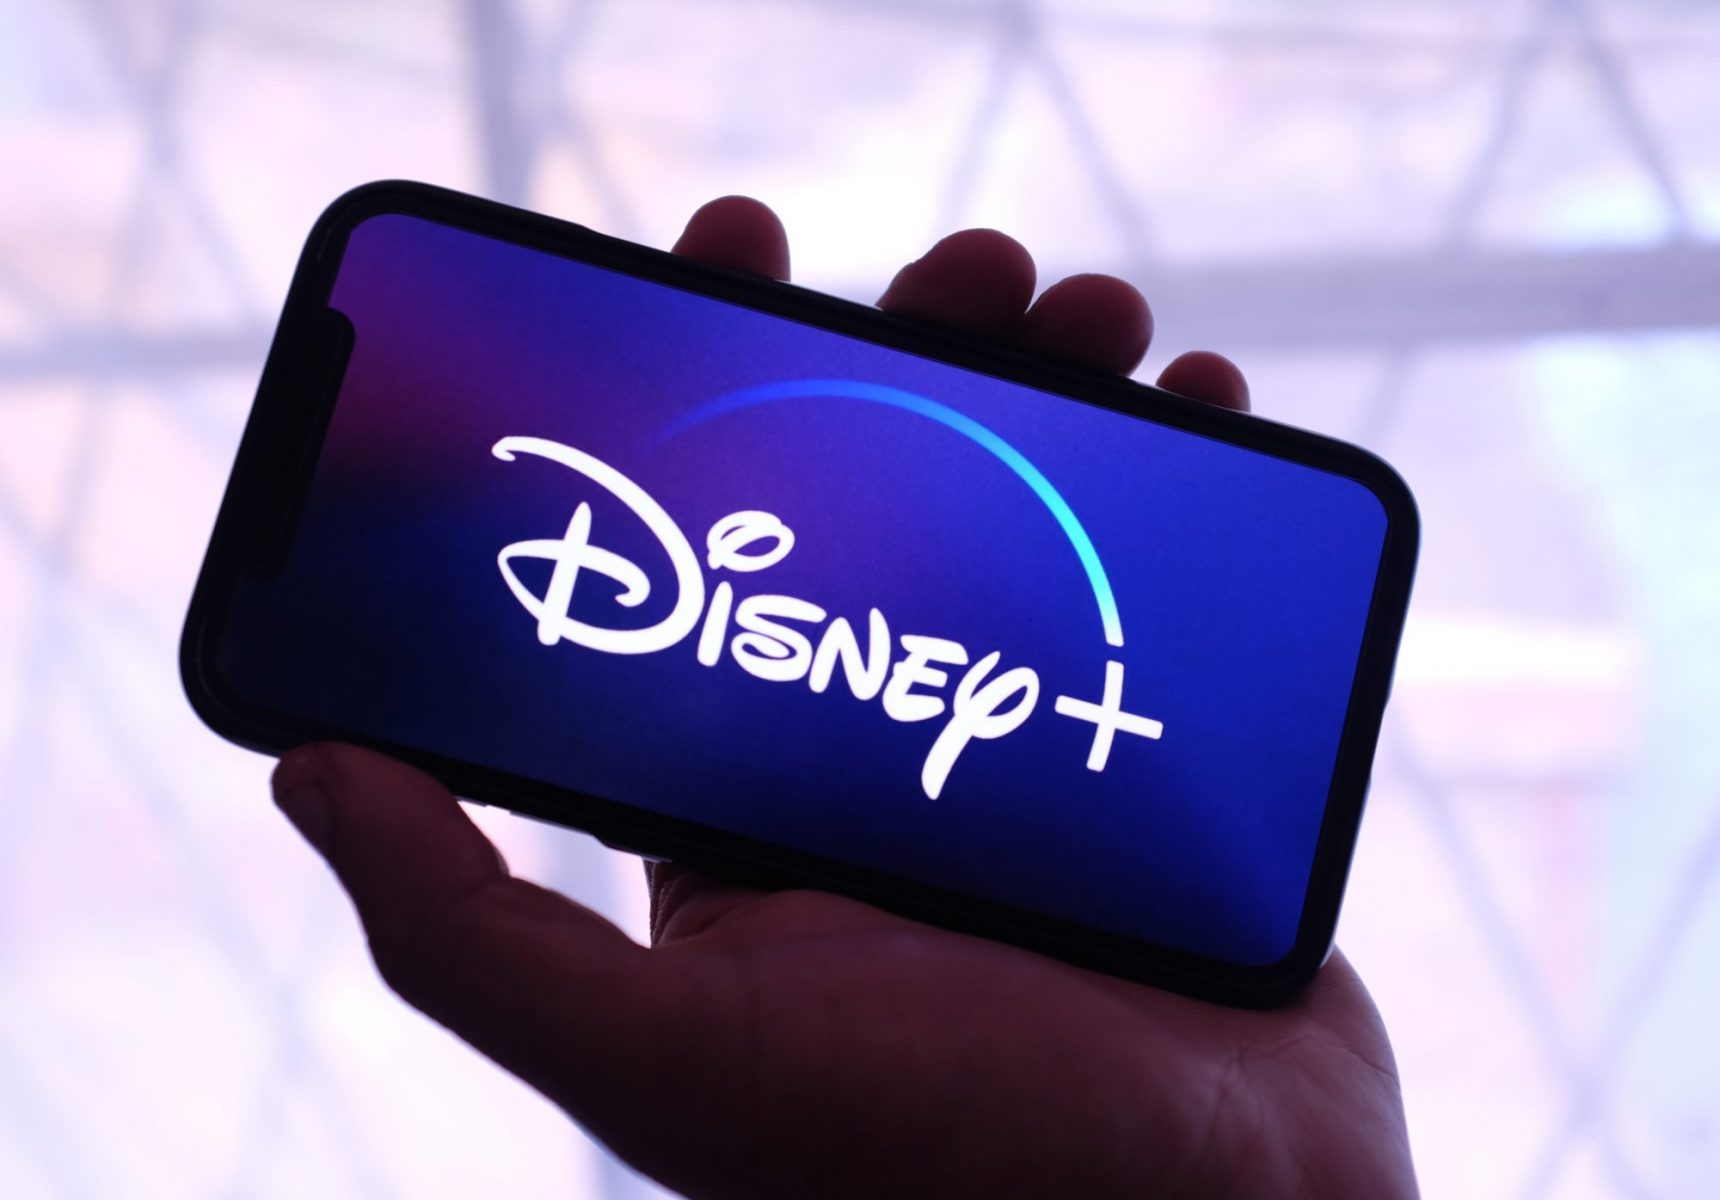 Disney + smartphone